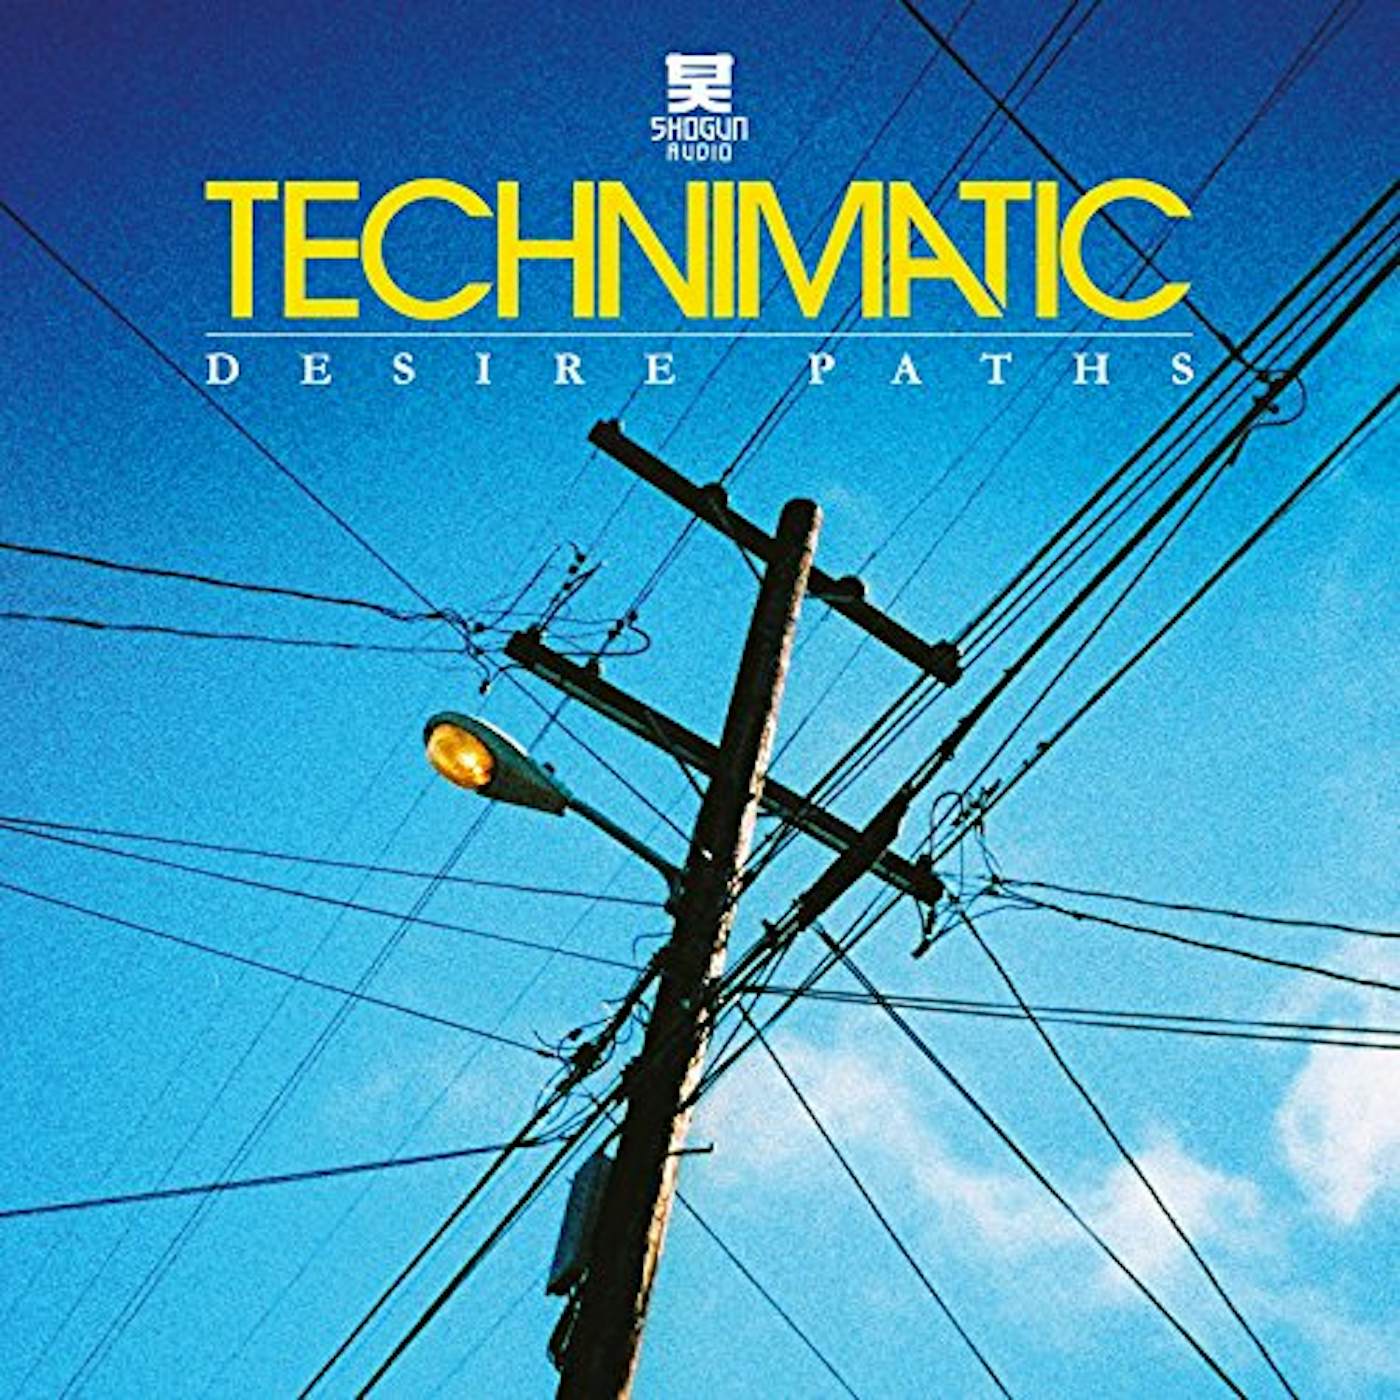 Technimatic DESIRE PATHS CD